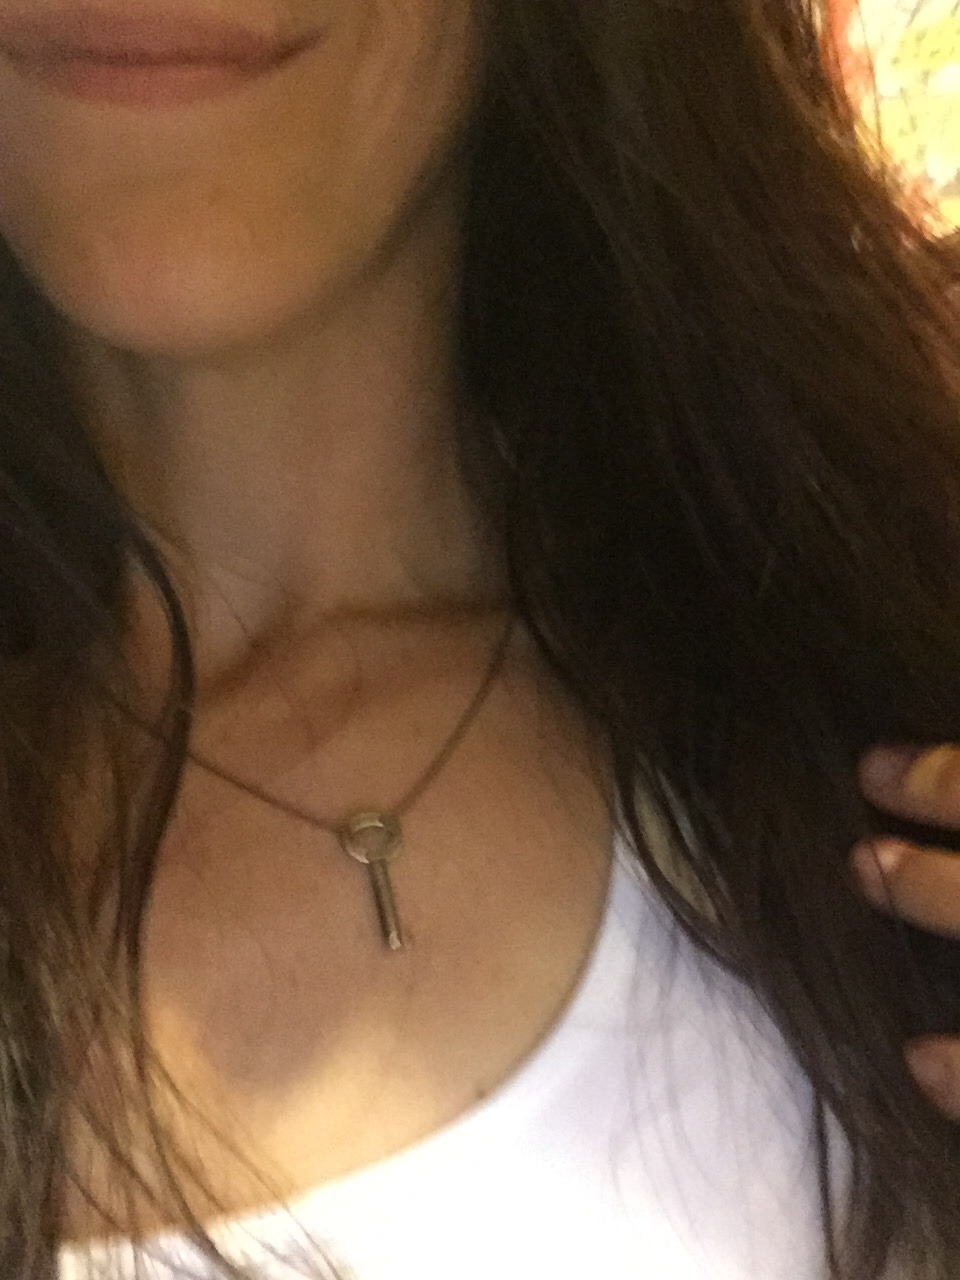 yogahotwife:  I love wearing my key around my neck! REALLY helps keep my sweet #cuck